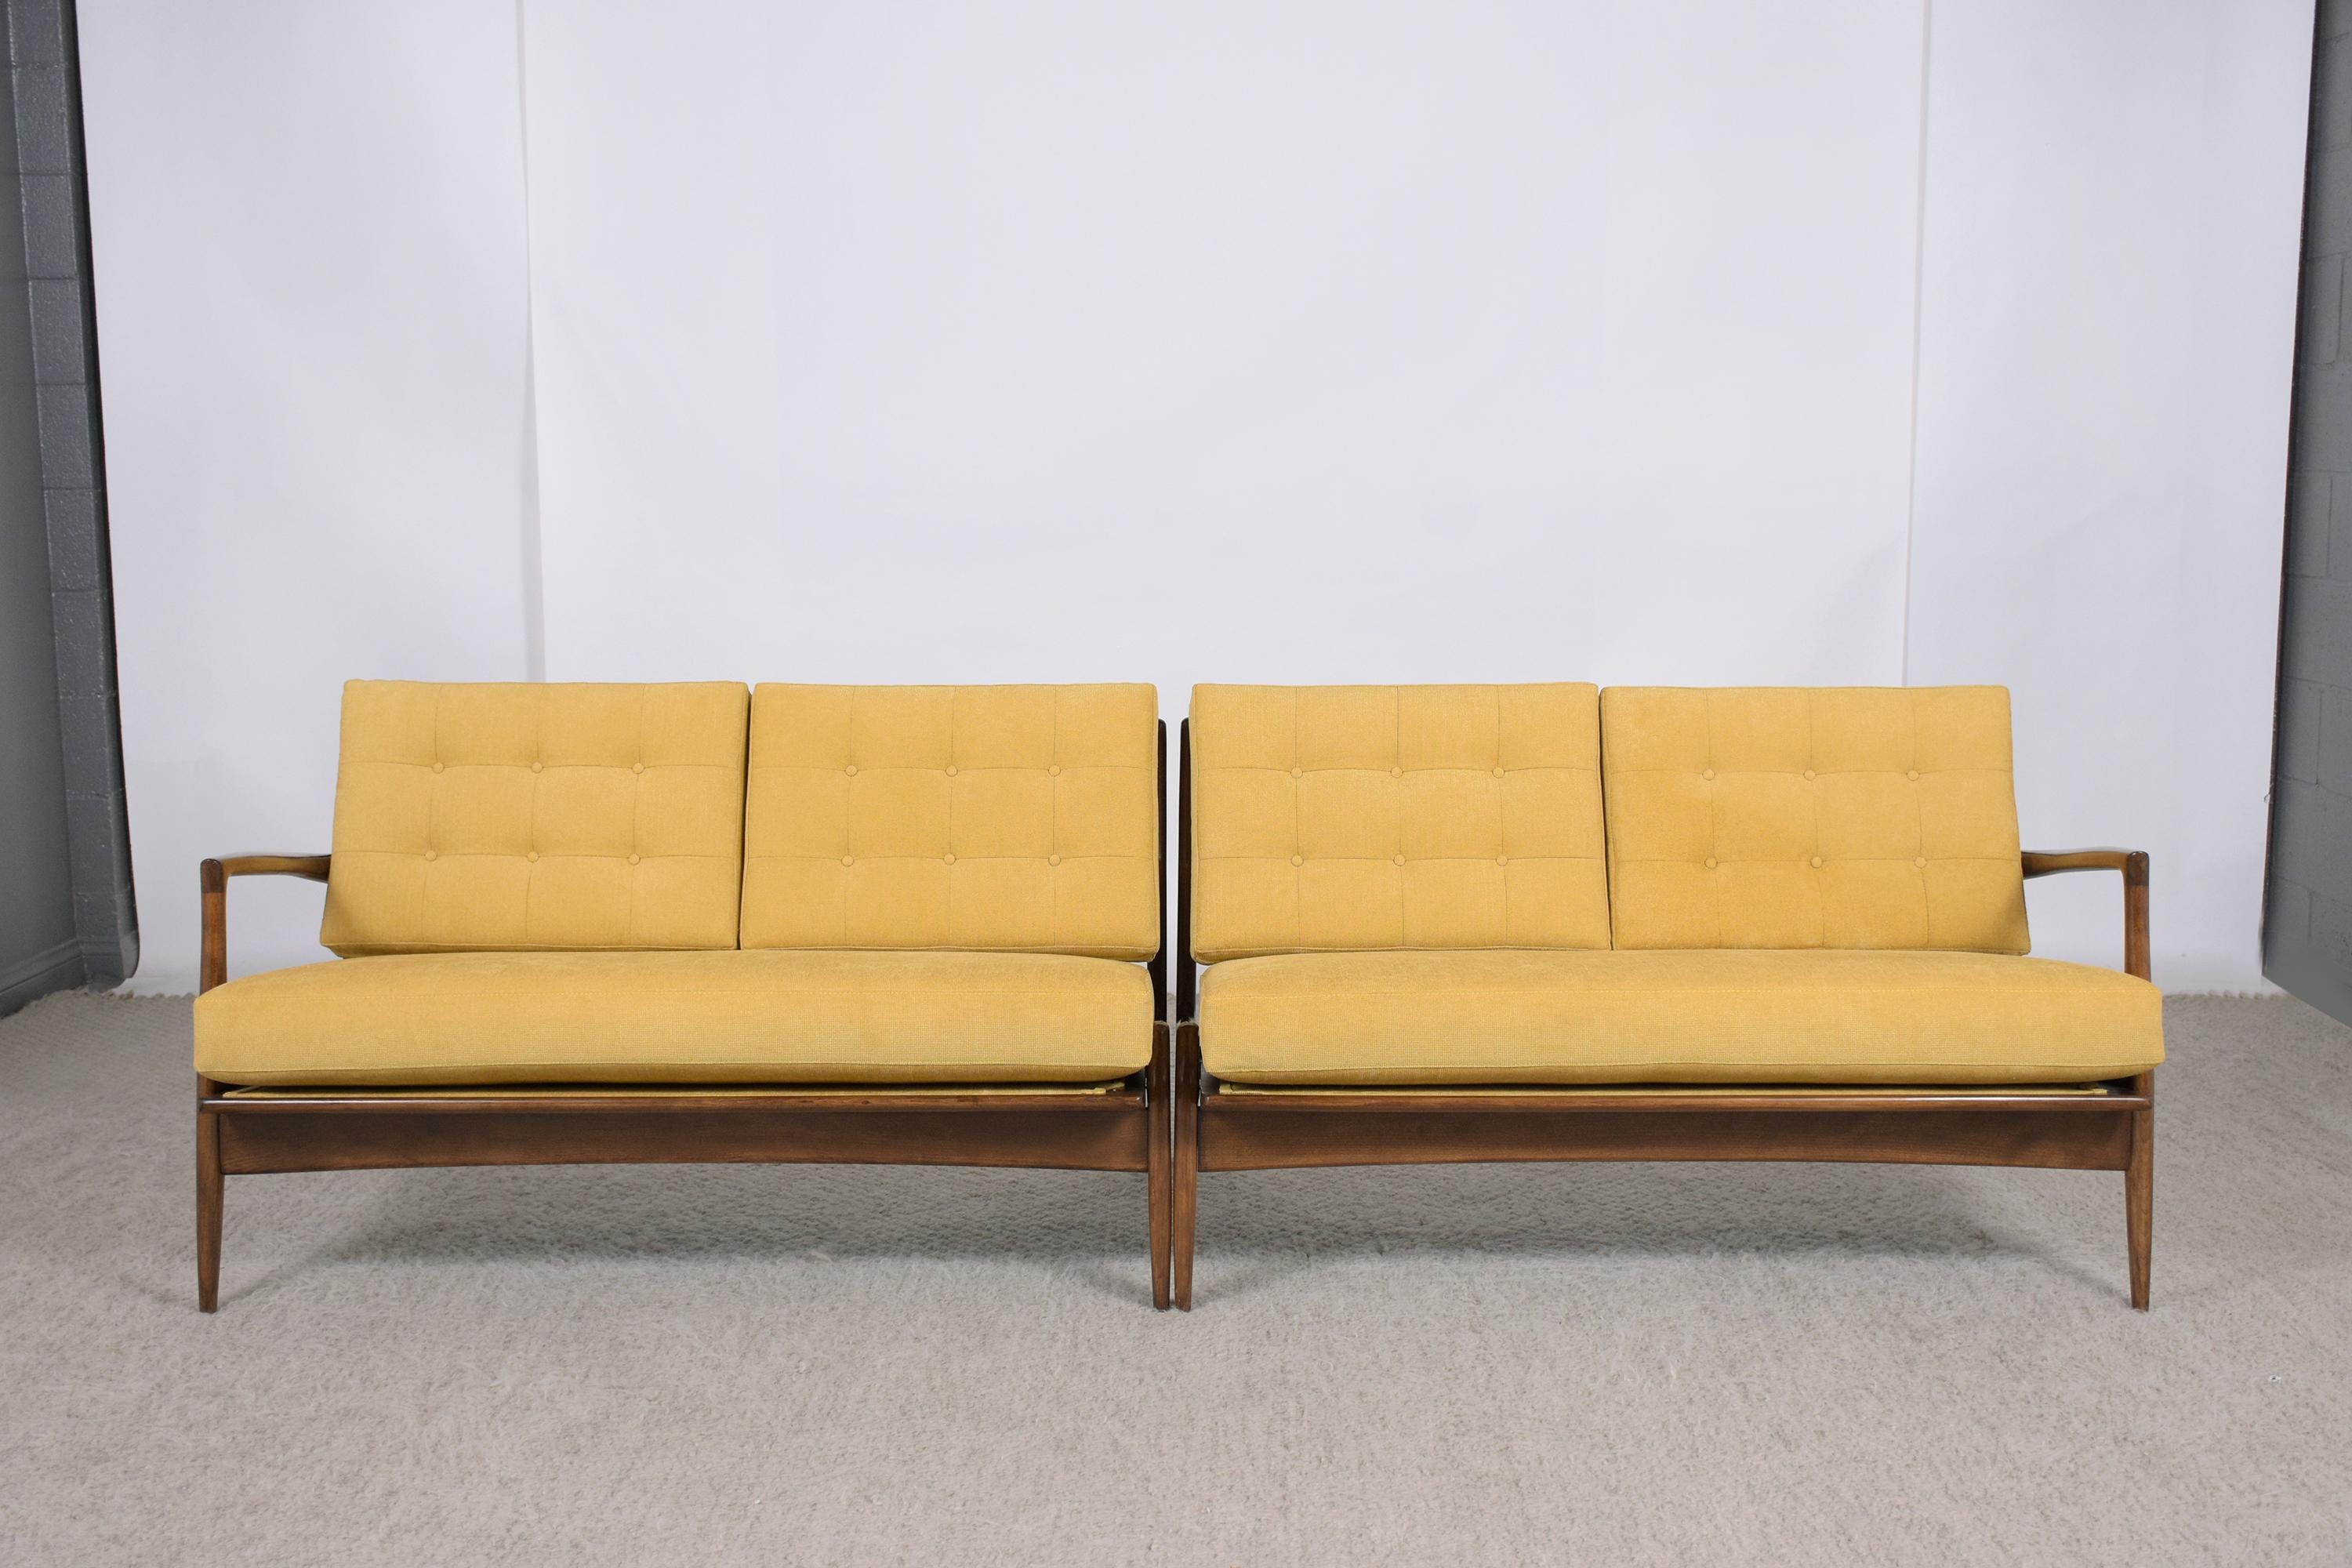 Hand-Carved 1960s Danish Mid-Century Modern Teak Sectional Sofa in Mustard Yellow